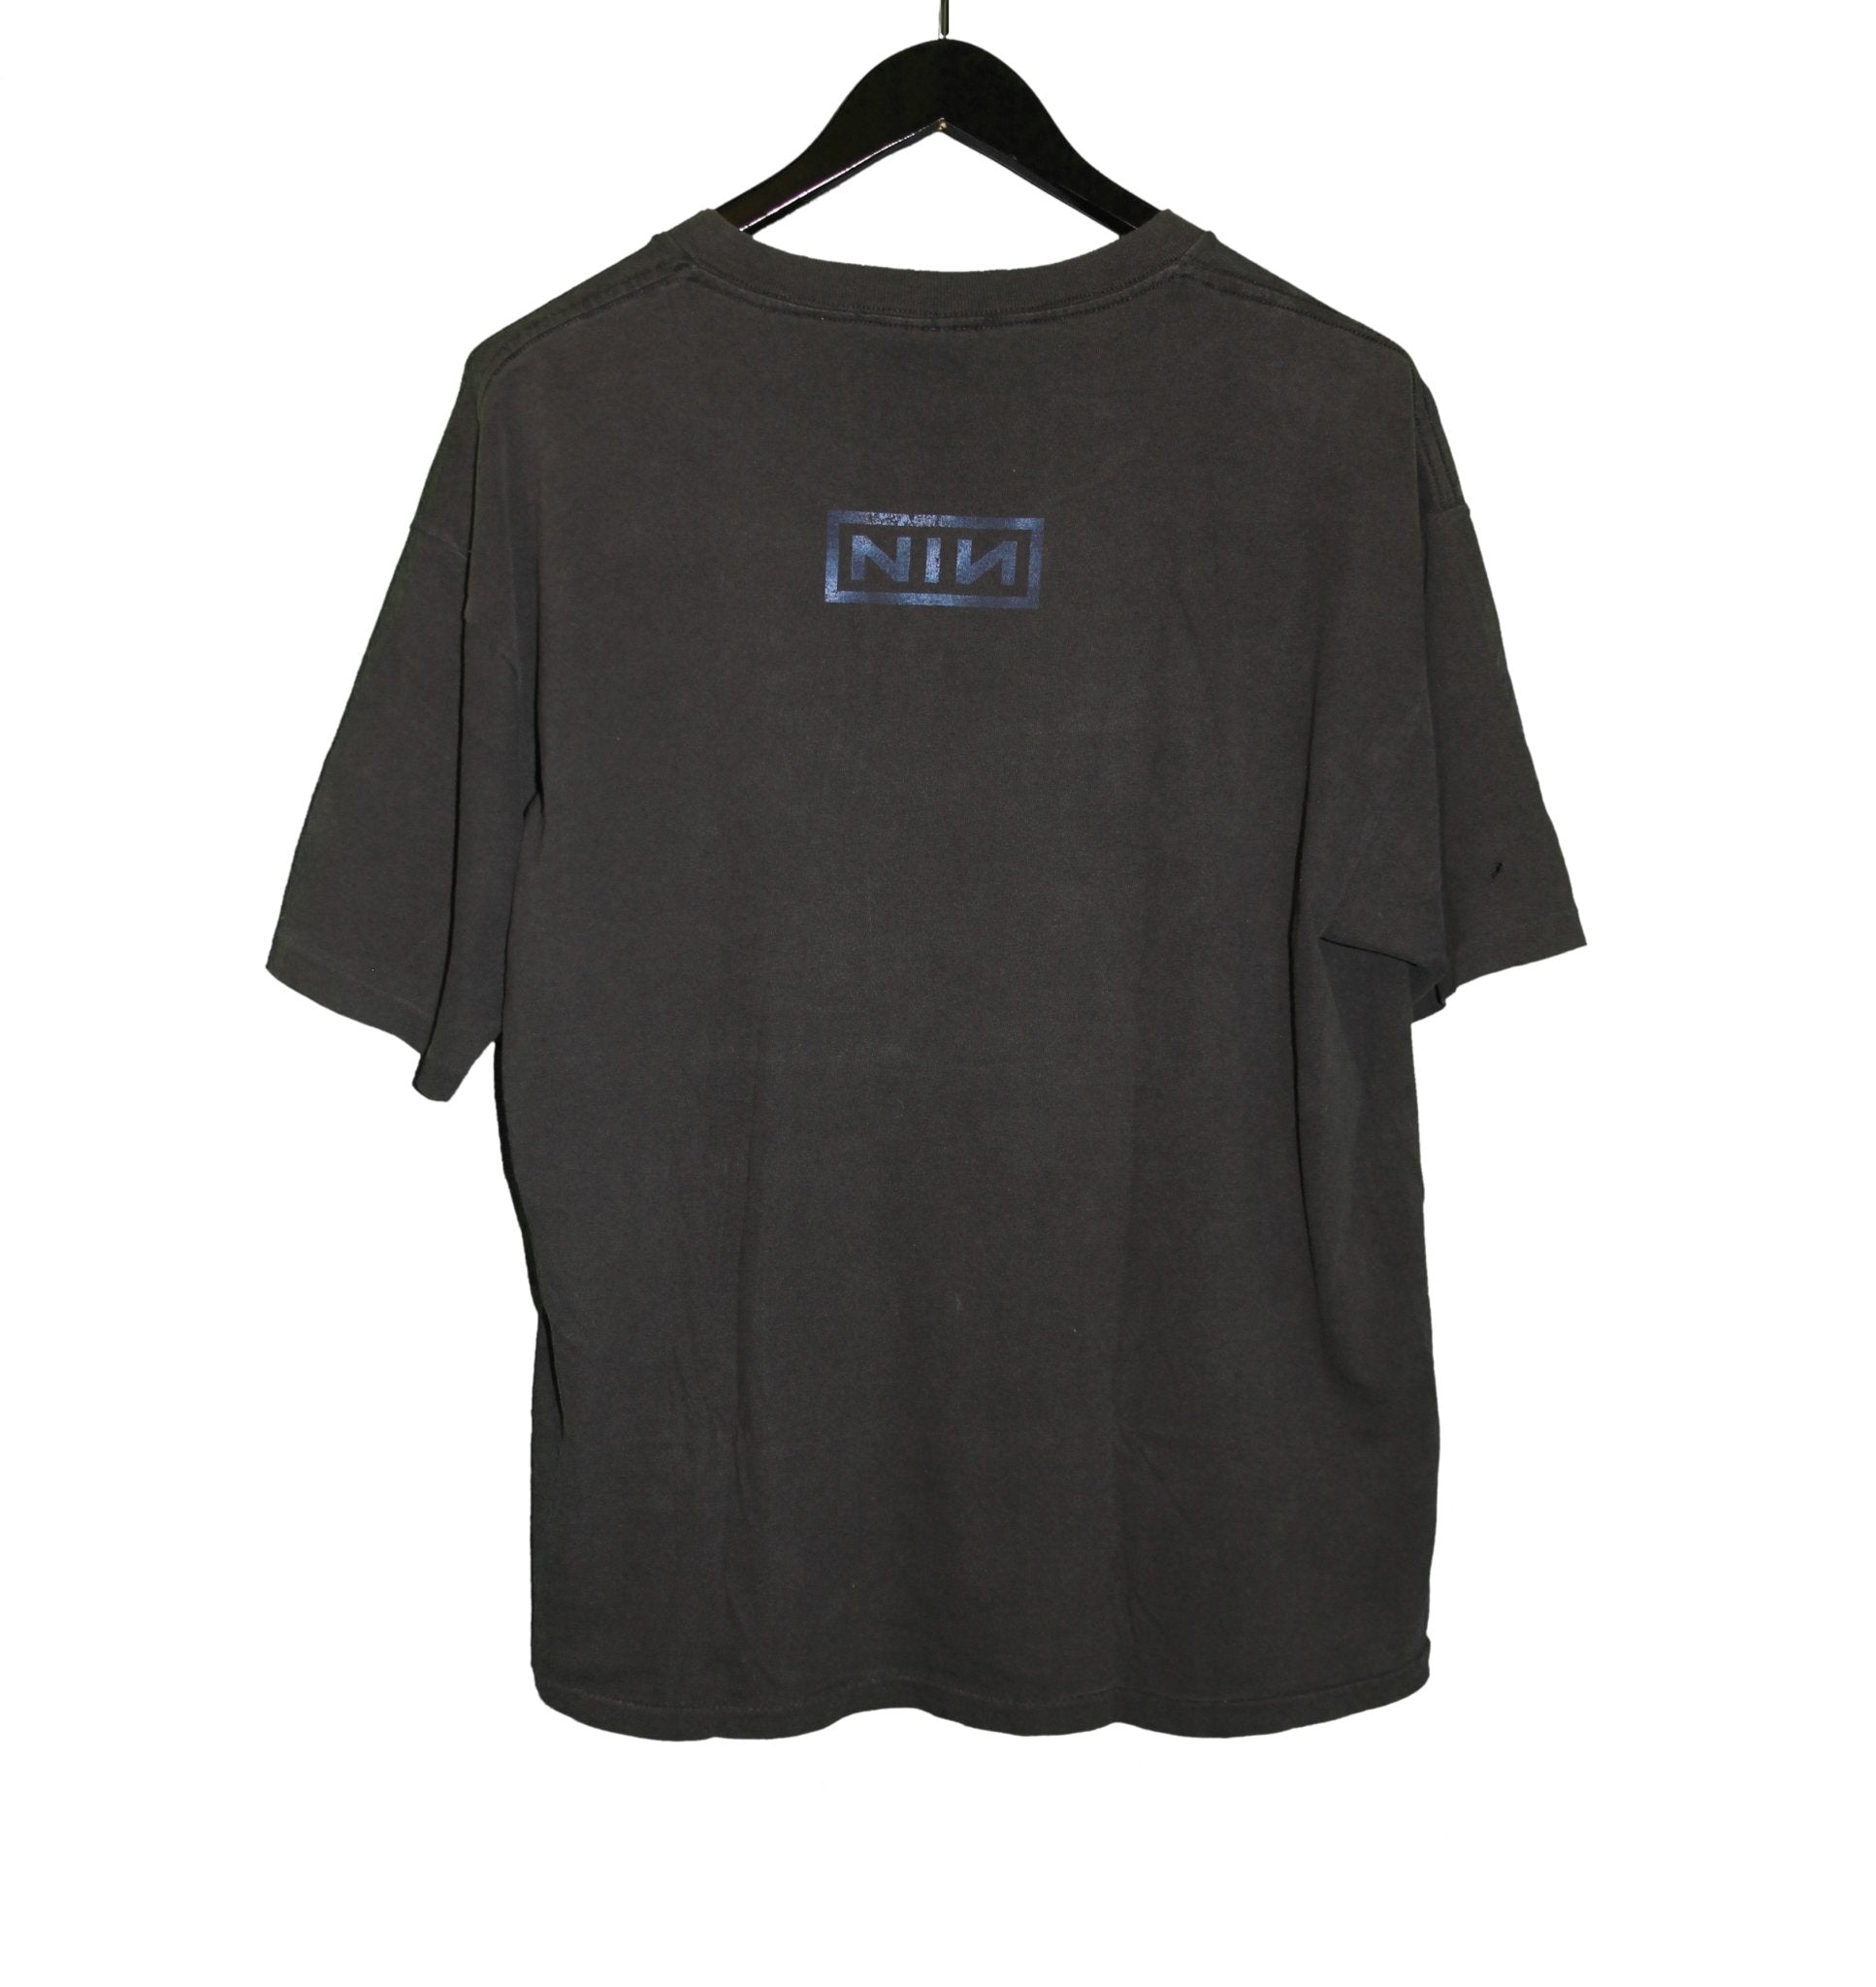 Nine Inch Nails 1999 The Fragile Shirt - Faded AU